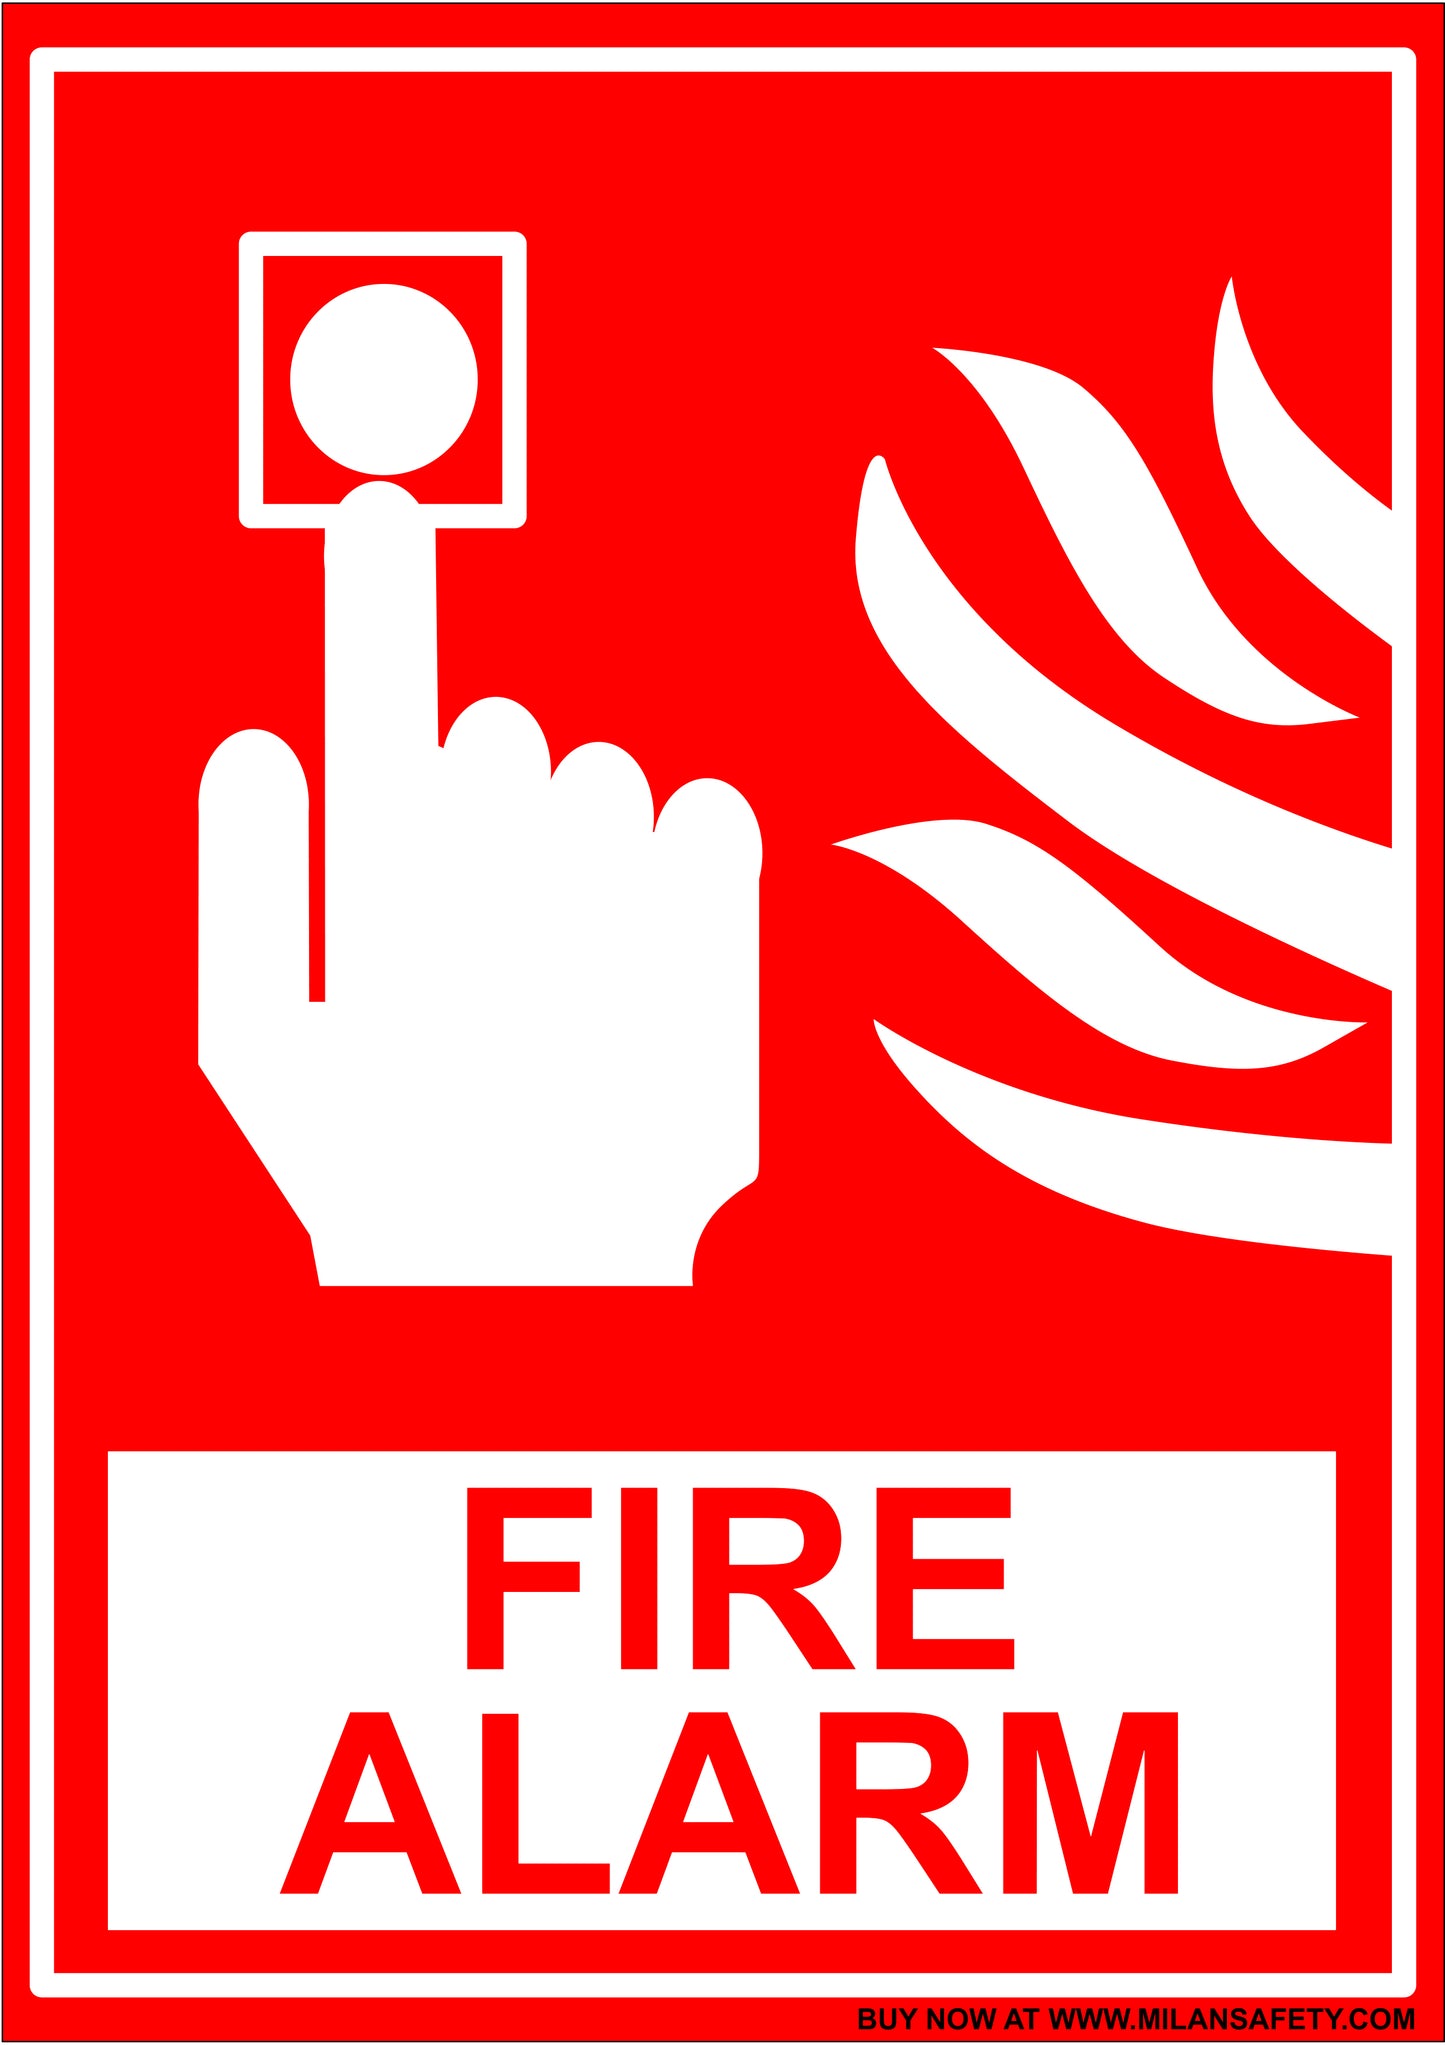 Fire alarm signage